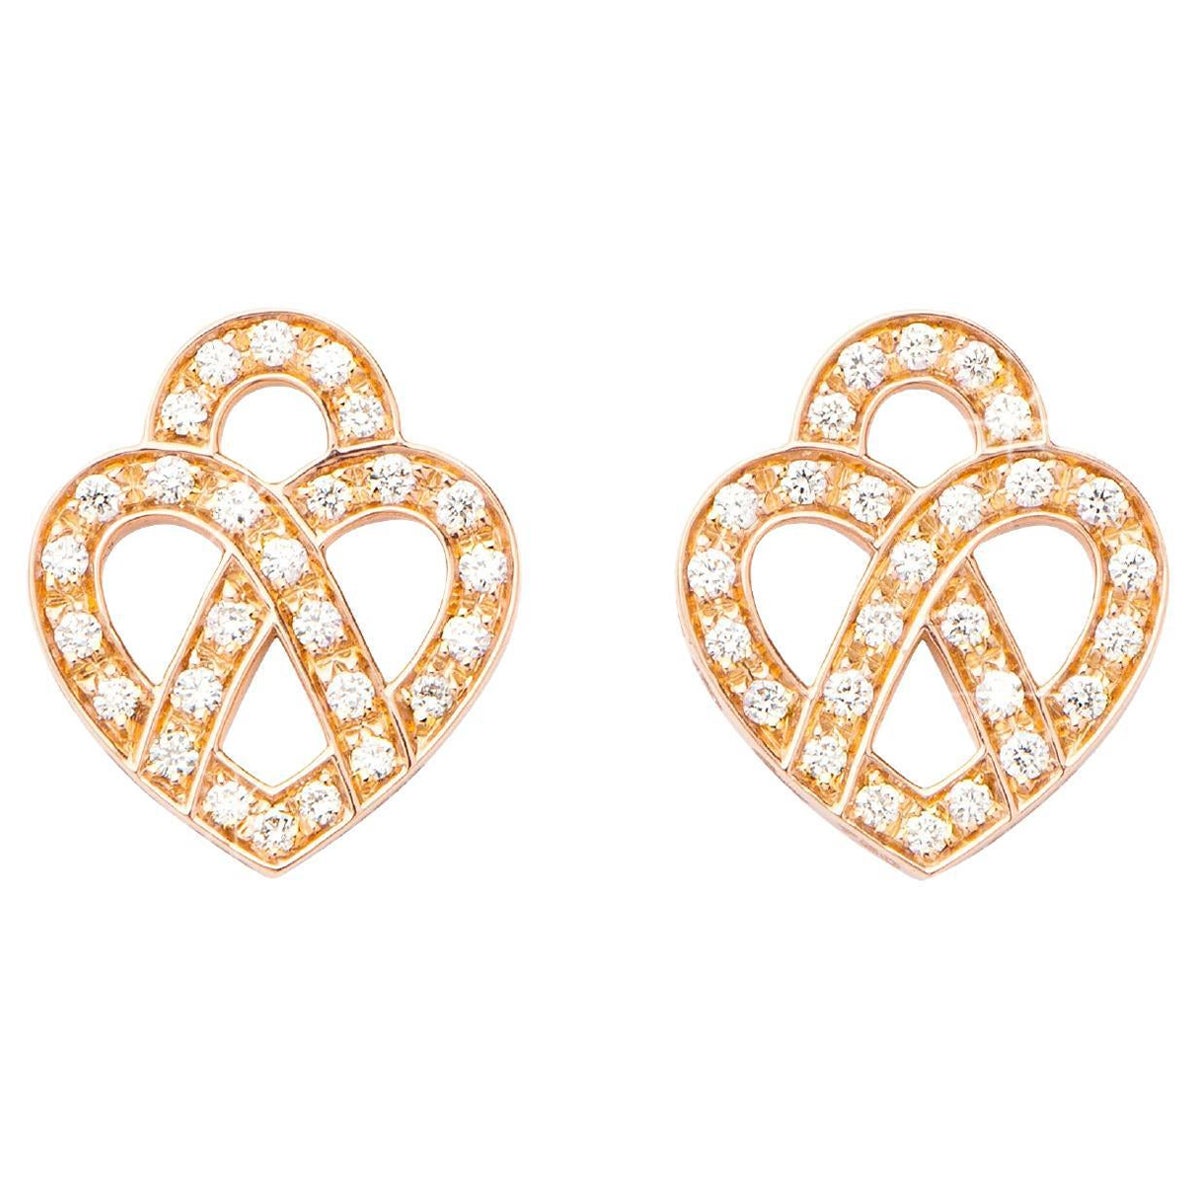 18 Carat Gold and Diamonds Earrings, Rose Gold, Cœur Entrelacé Collection